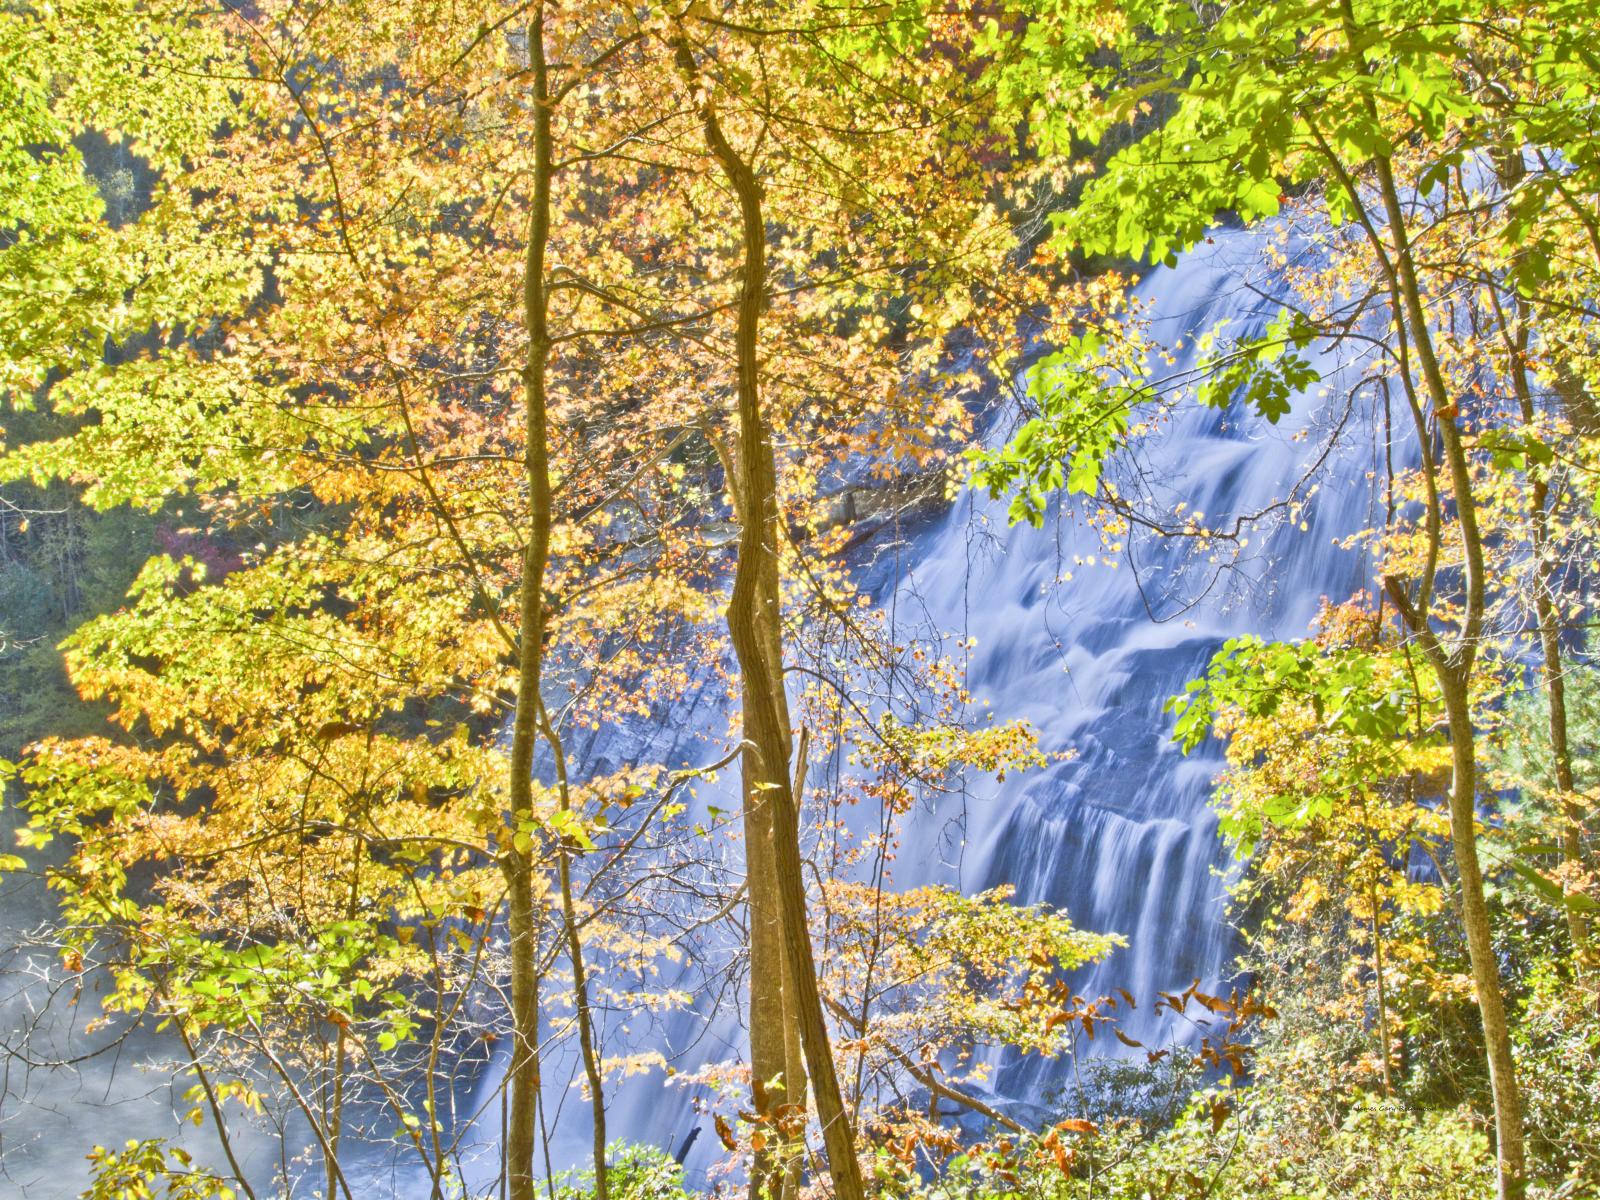 38297 north carolina rainbow falls, waterfalls, fall color leaf change,,.jpg